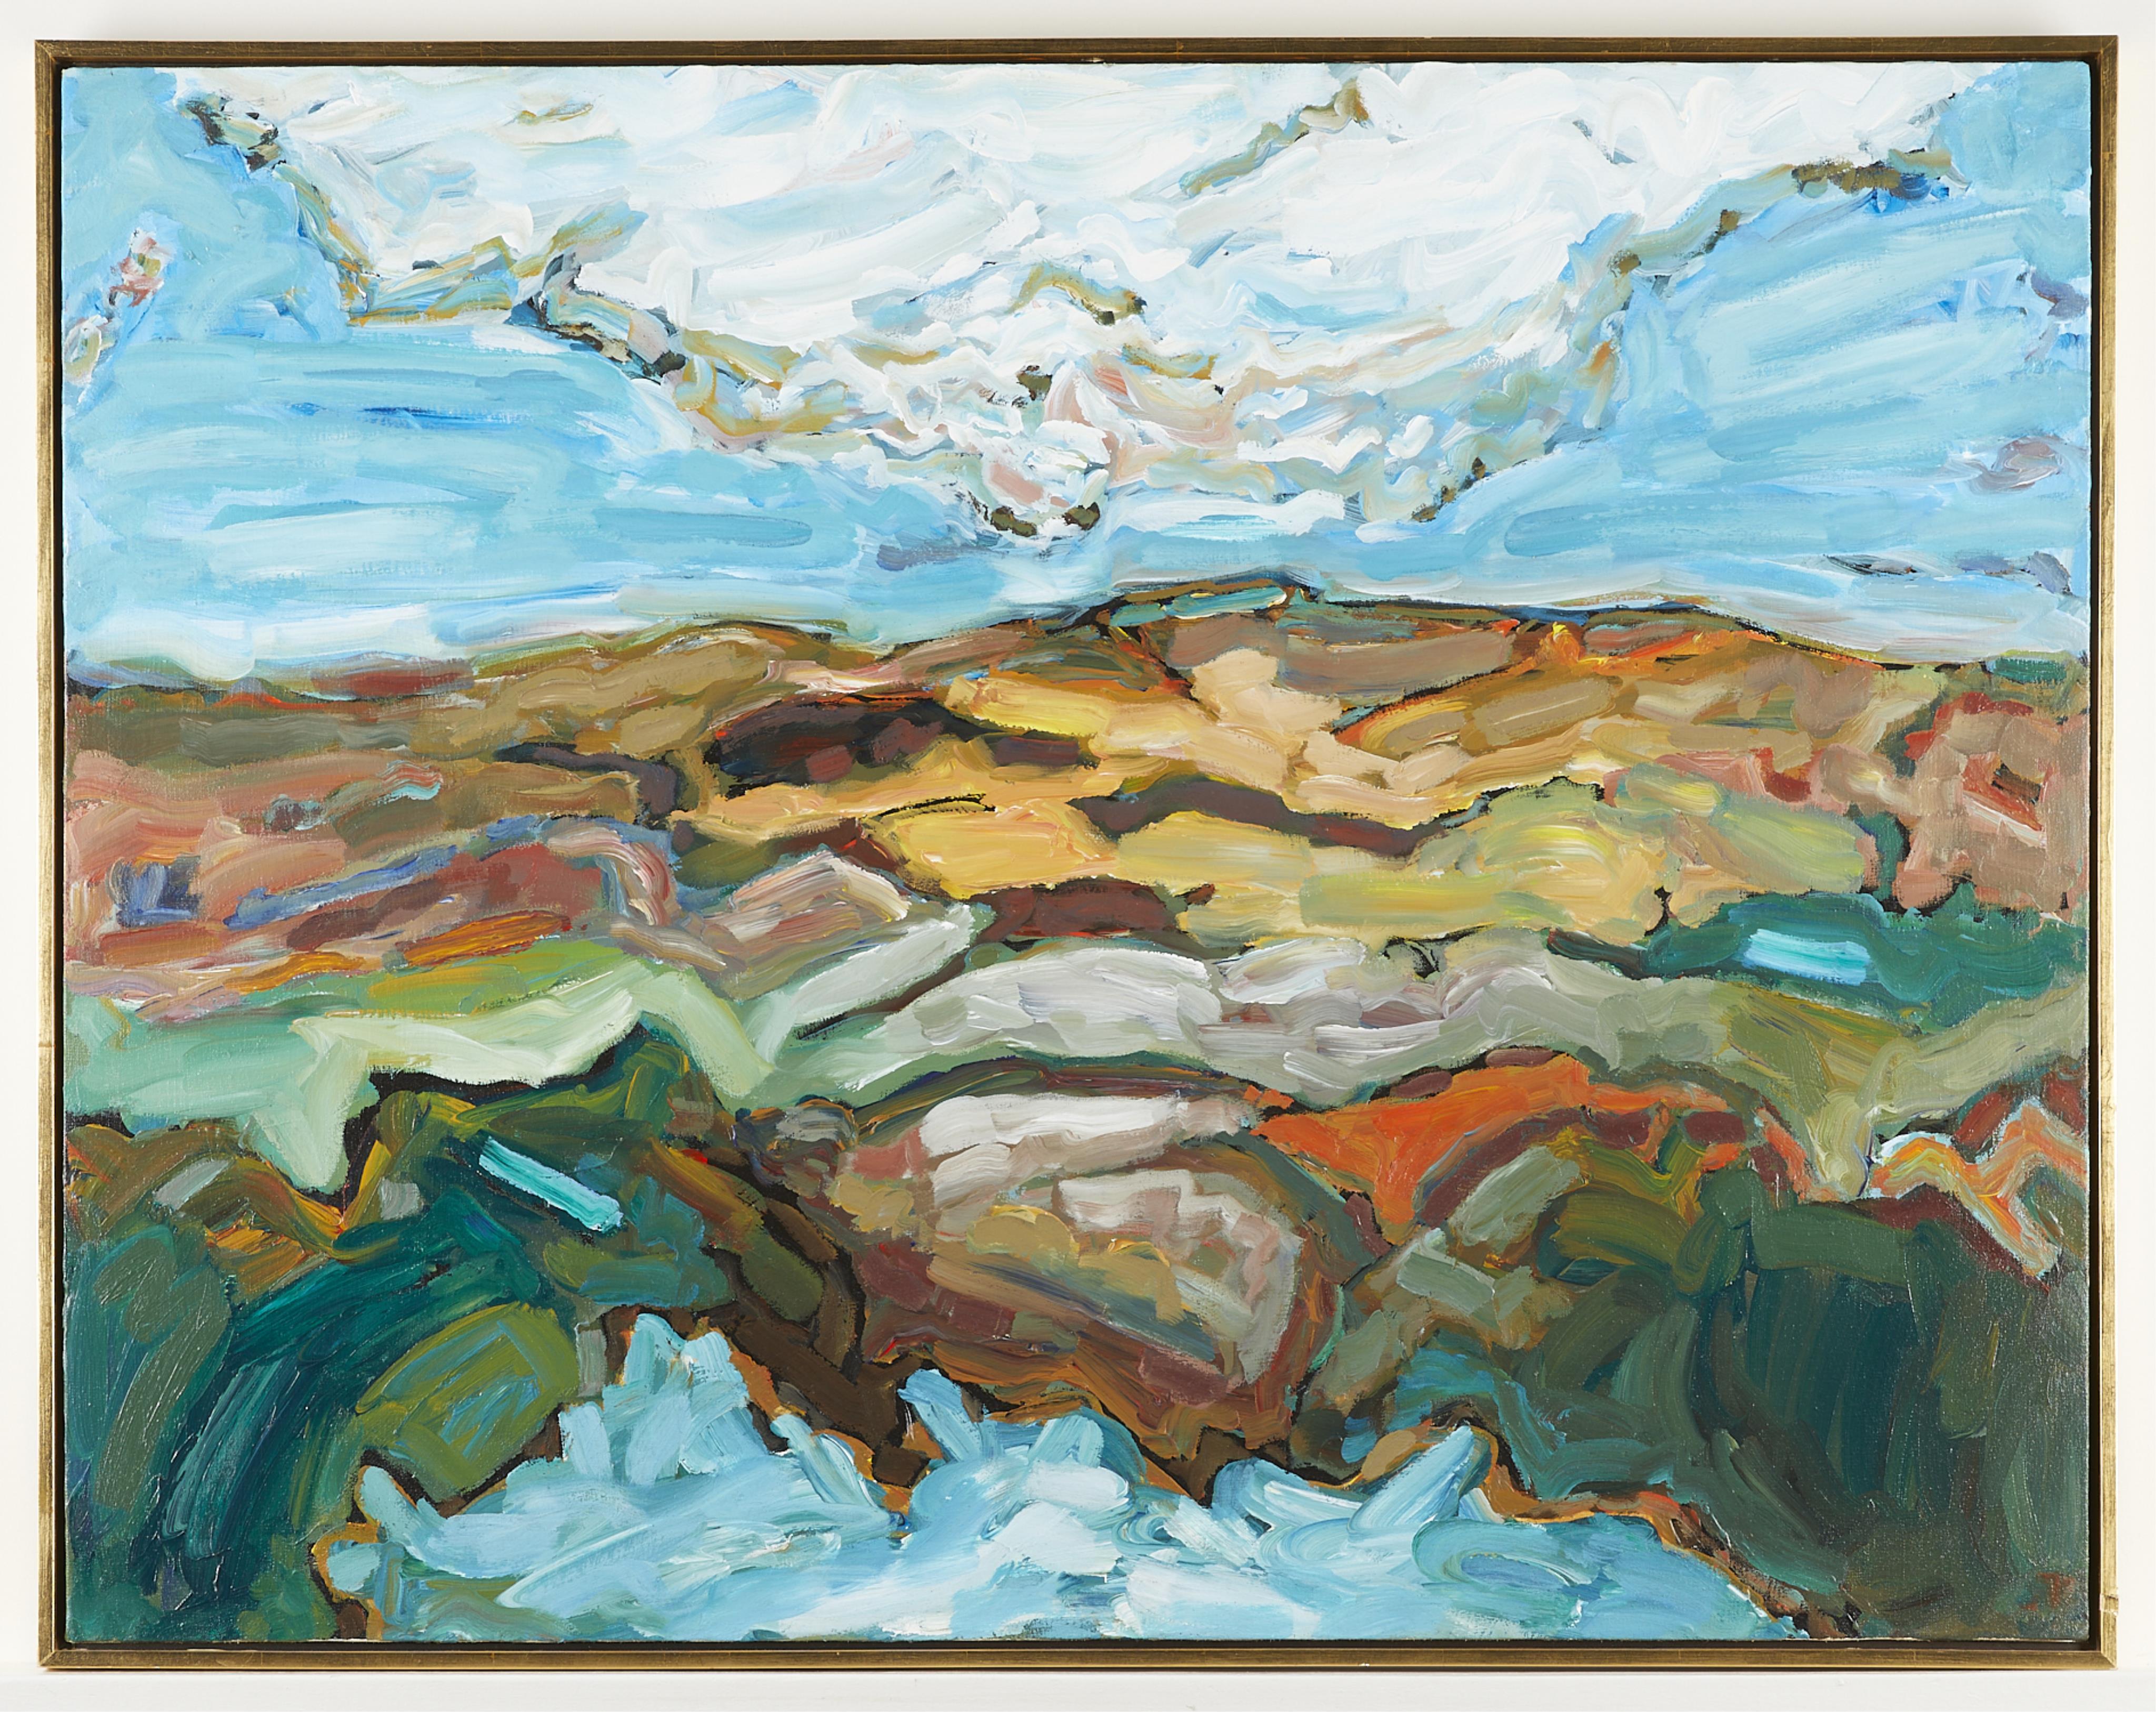 Dennis Dykema "Big Cloud Landscape" Painting 1989 - Image 3 of 8